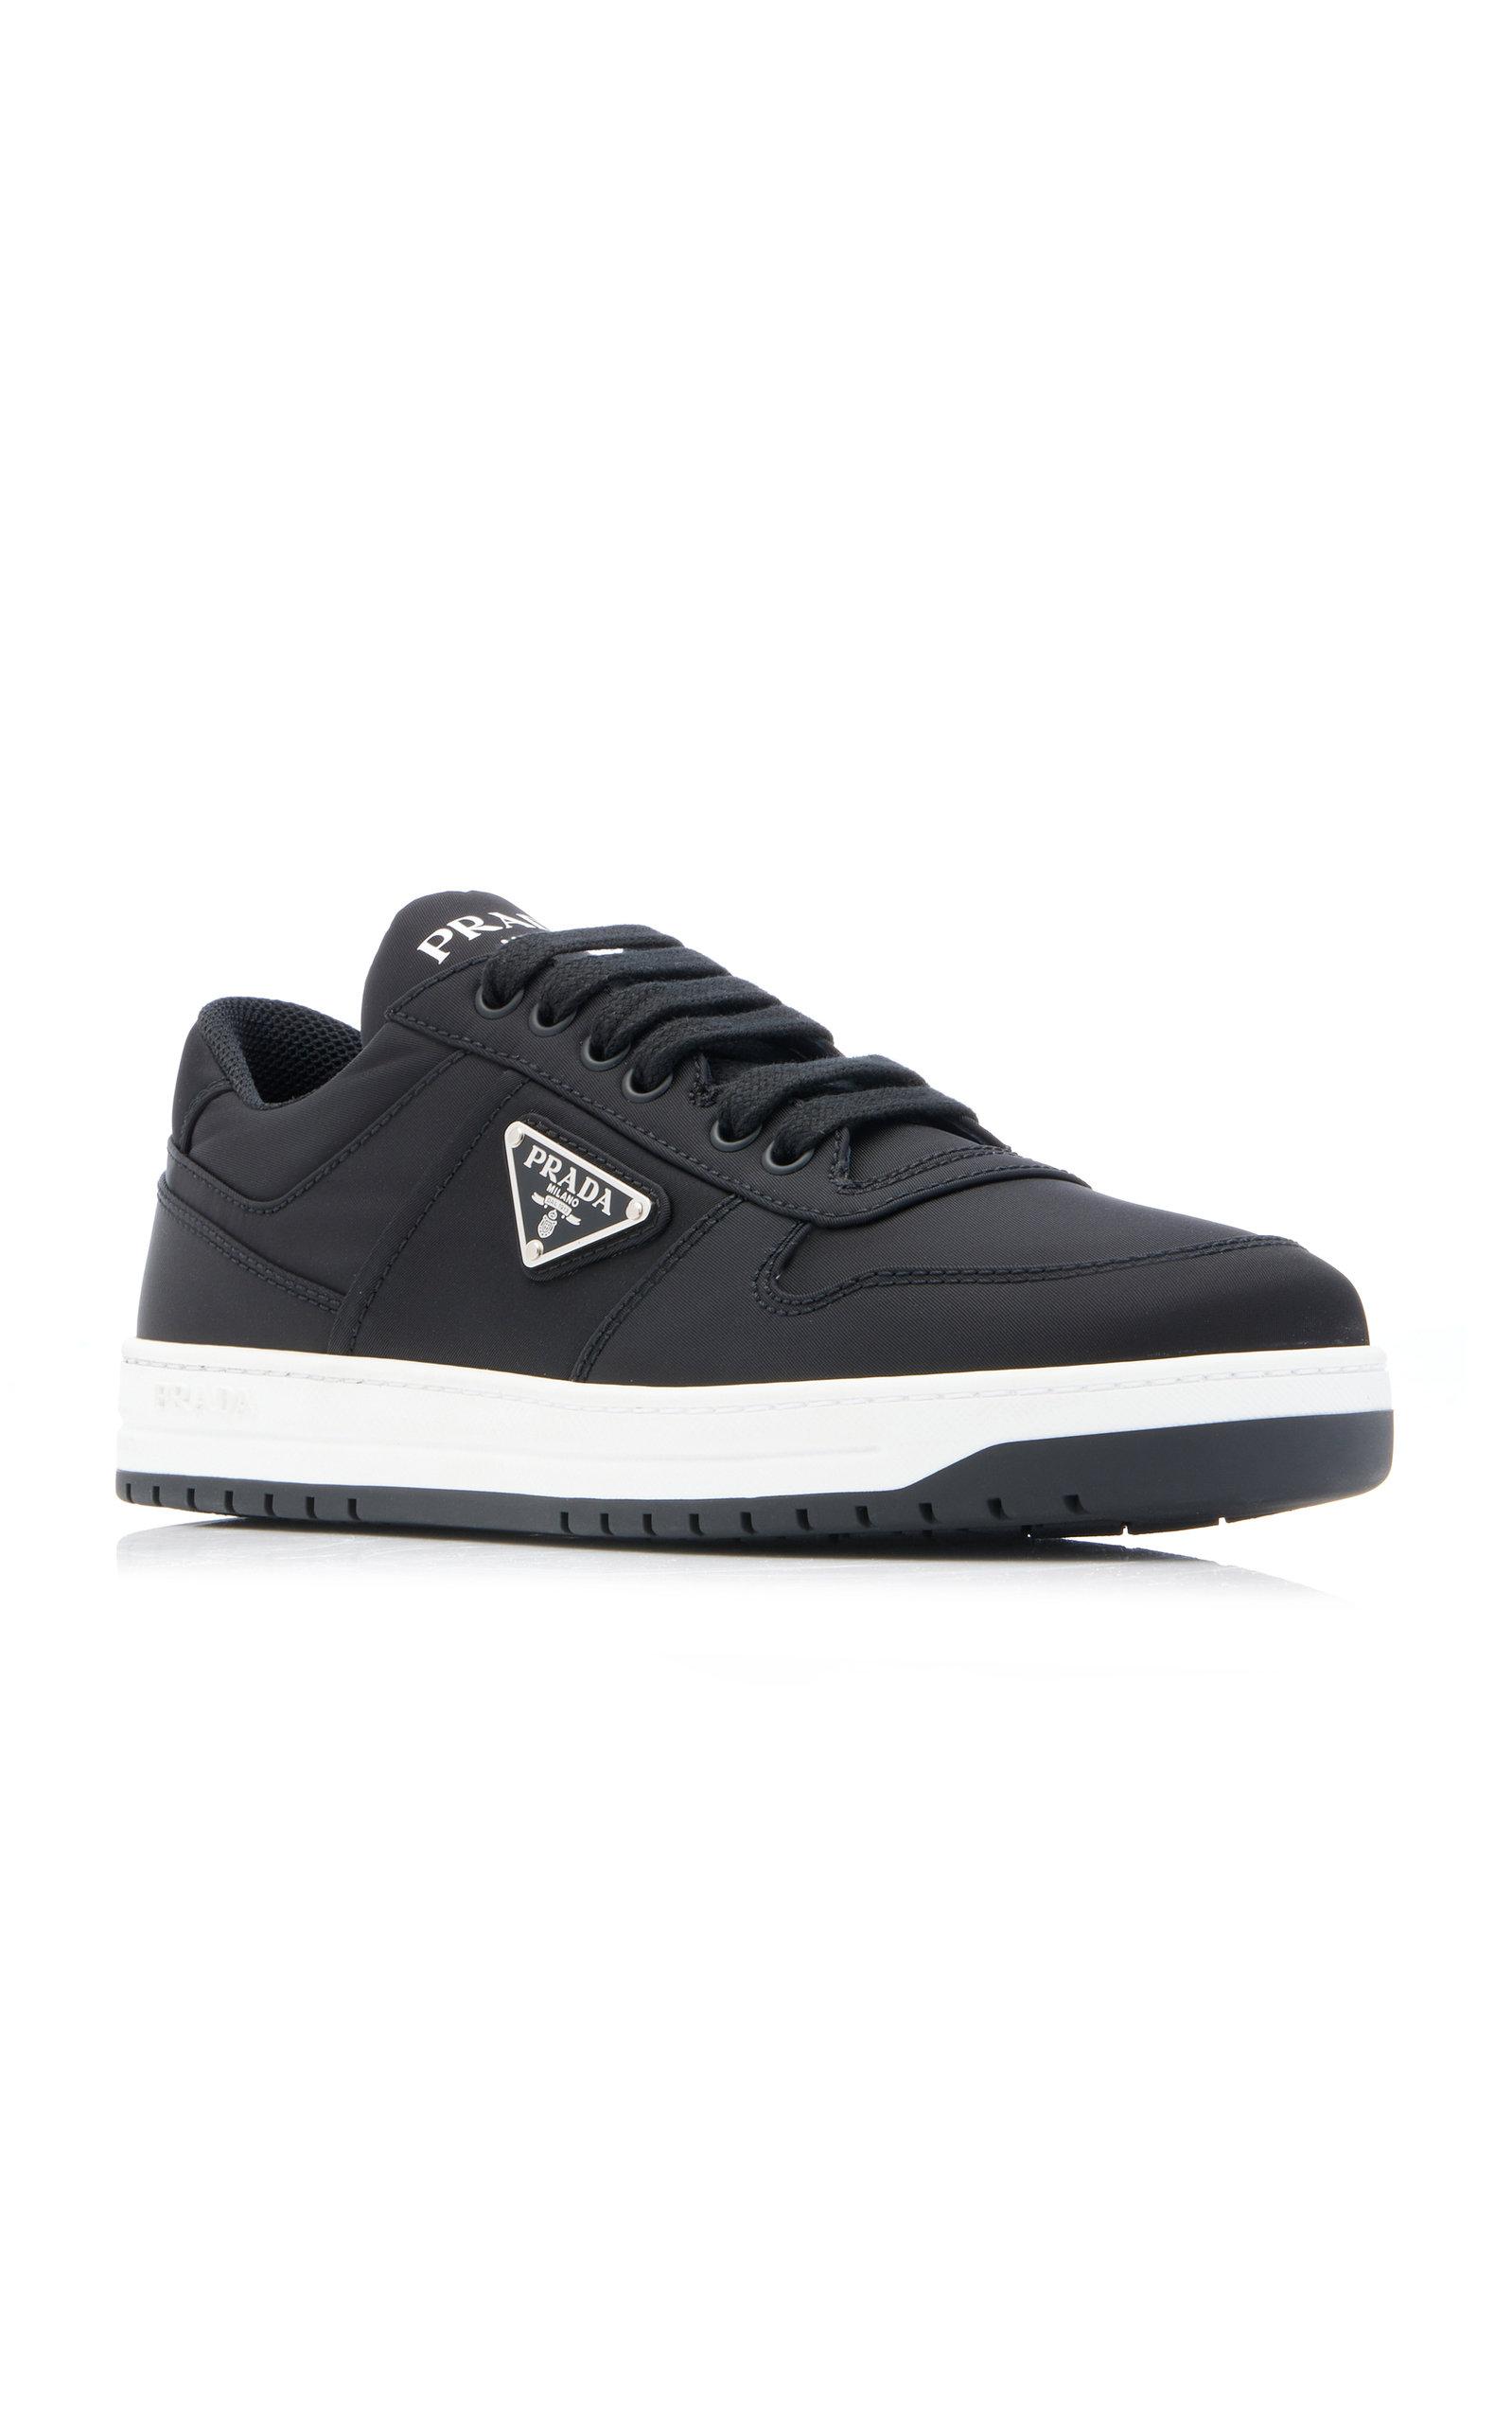 Prada Basket Nylon Sneakers in Black | Lyst